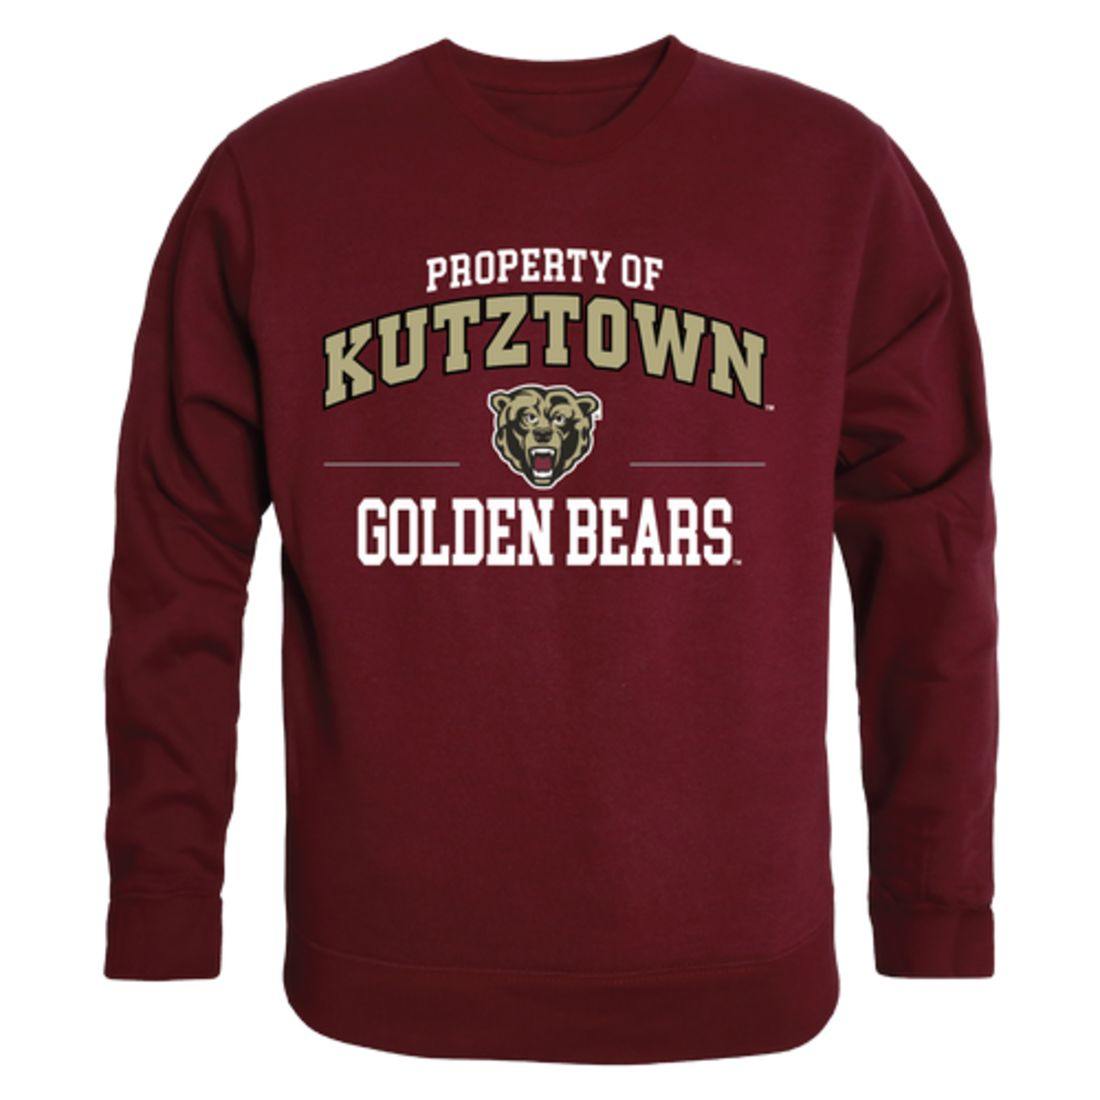 Kutztown University of Pennsylvania Golden Bears Property Crewneck Pullover Sweatshirt Sweater Maroon-Campus-Wardrobe